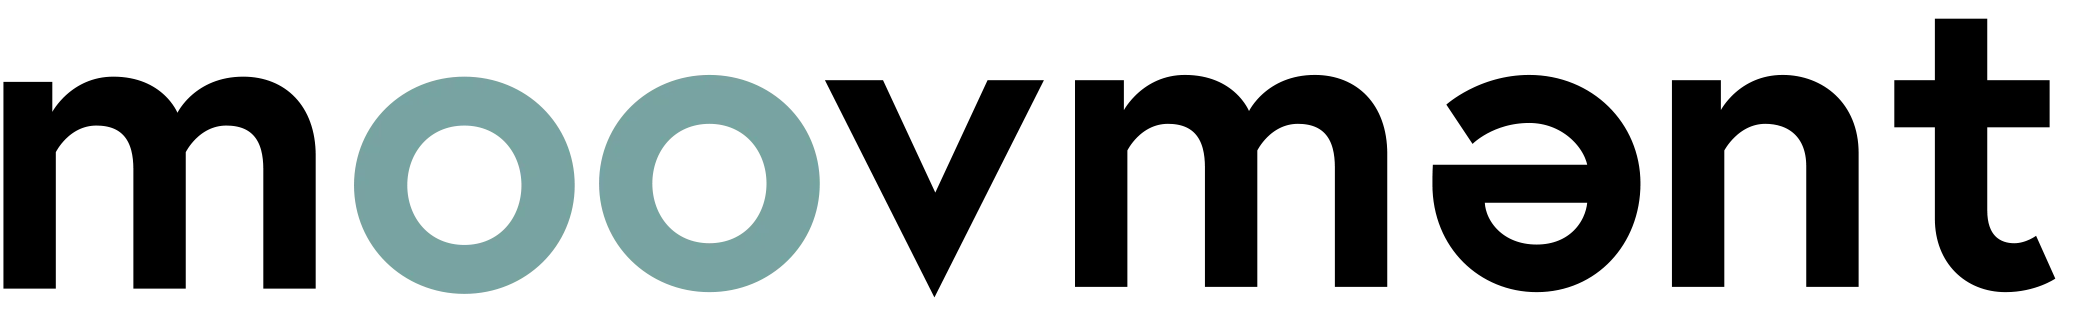 Moovement logo